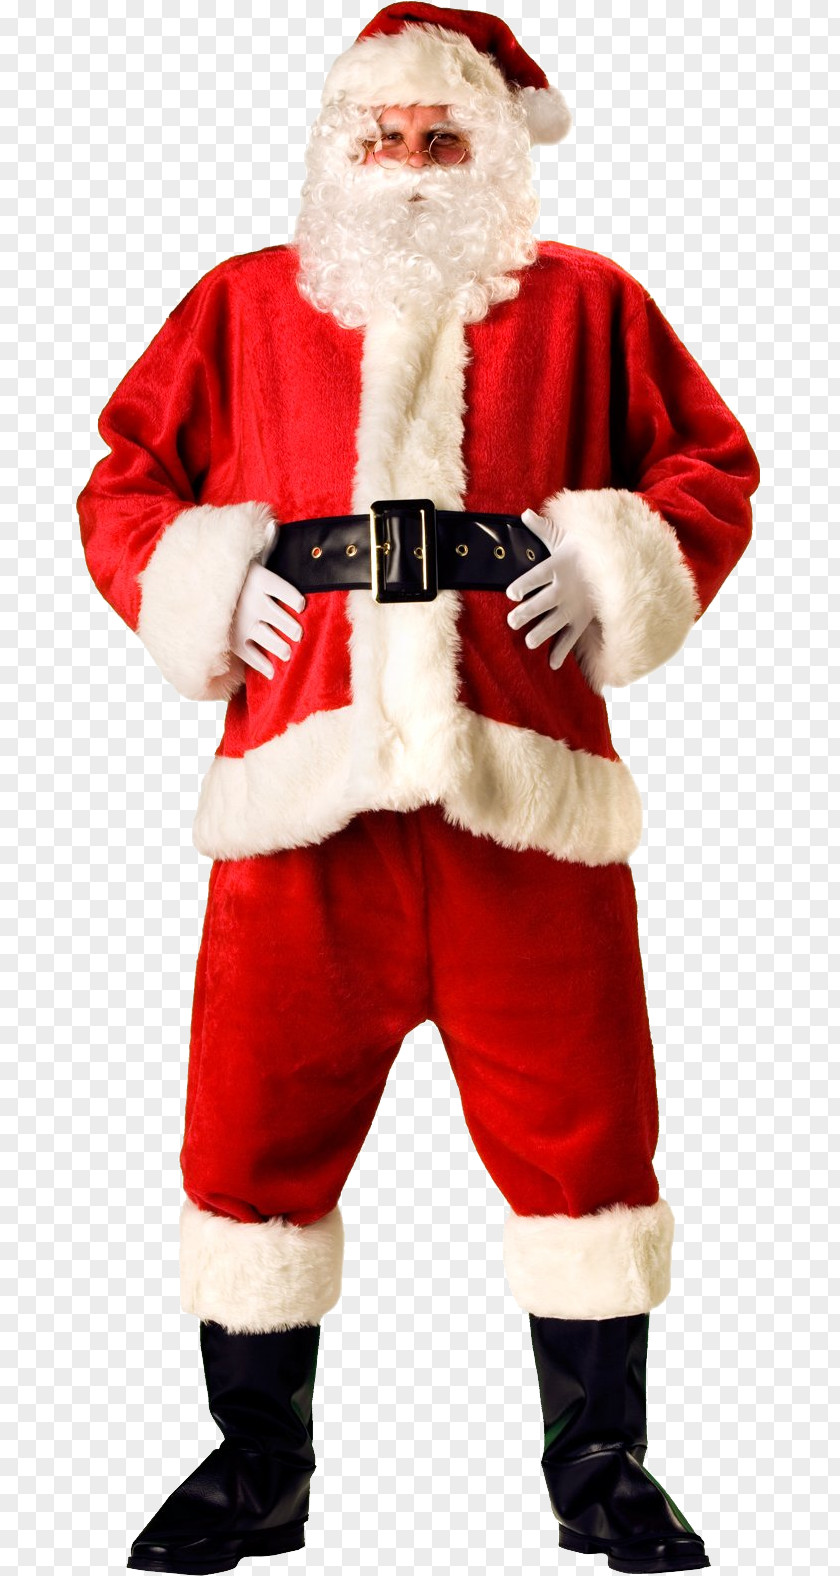 Santa Claus Claus's Reindeer Christmas Gift PNG